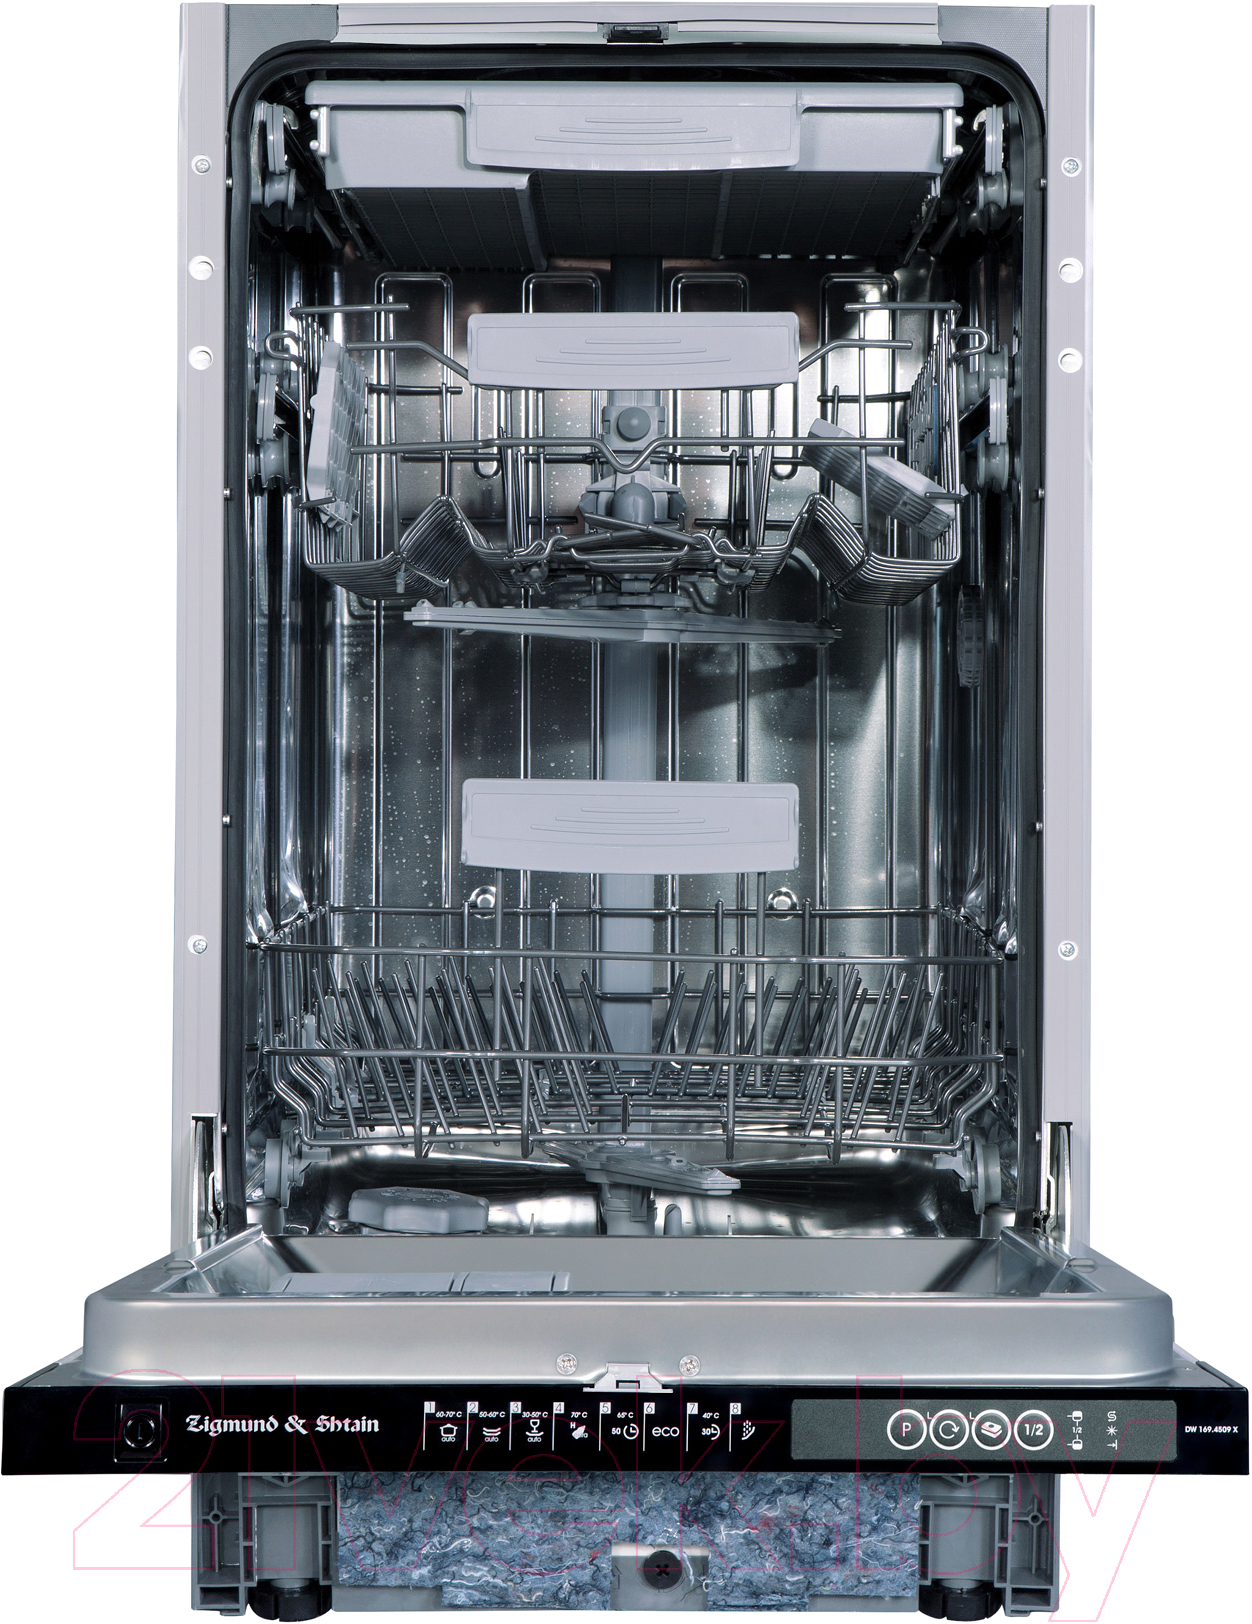 Посудомоечная машина Zigmund & Shtain DW 169.4509 X